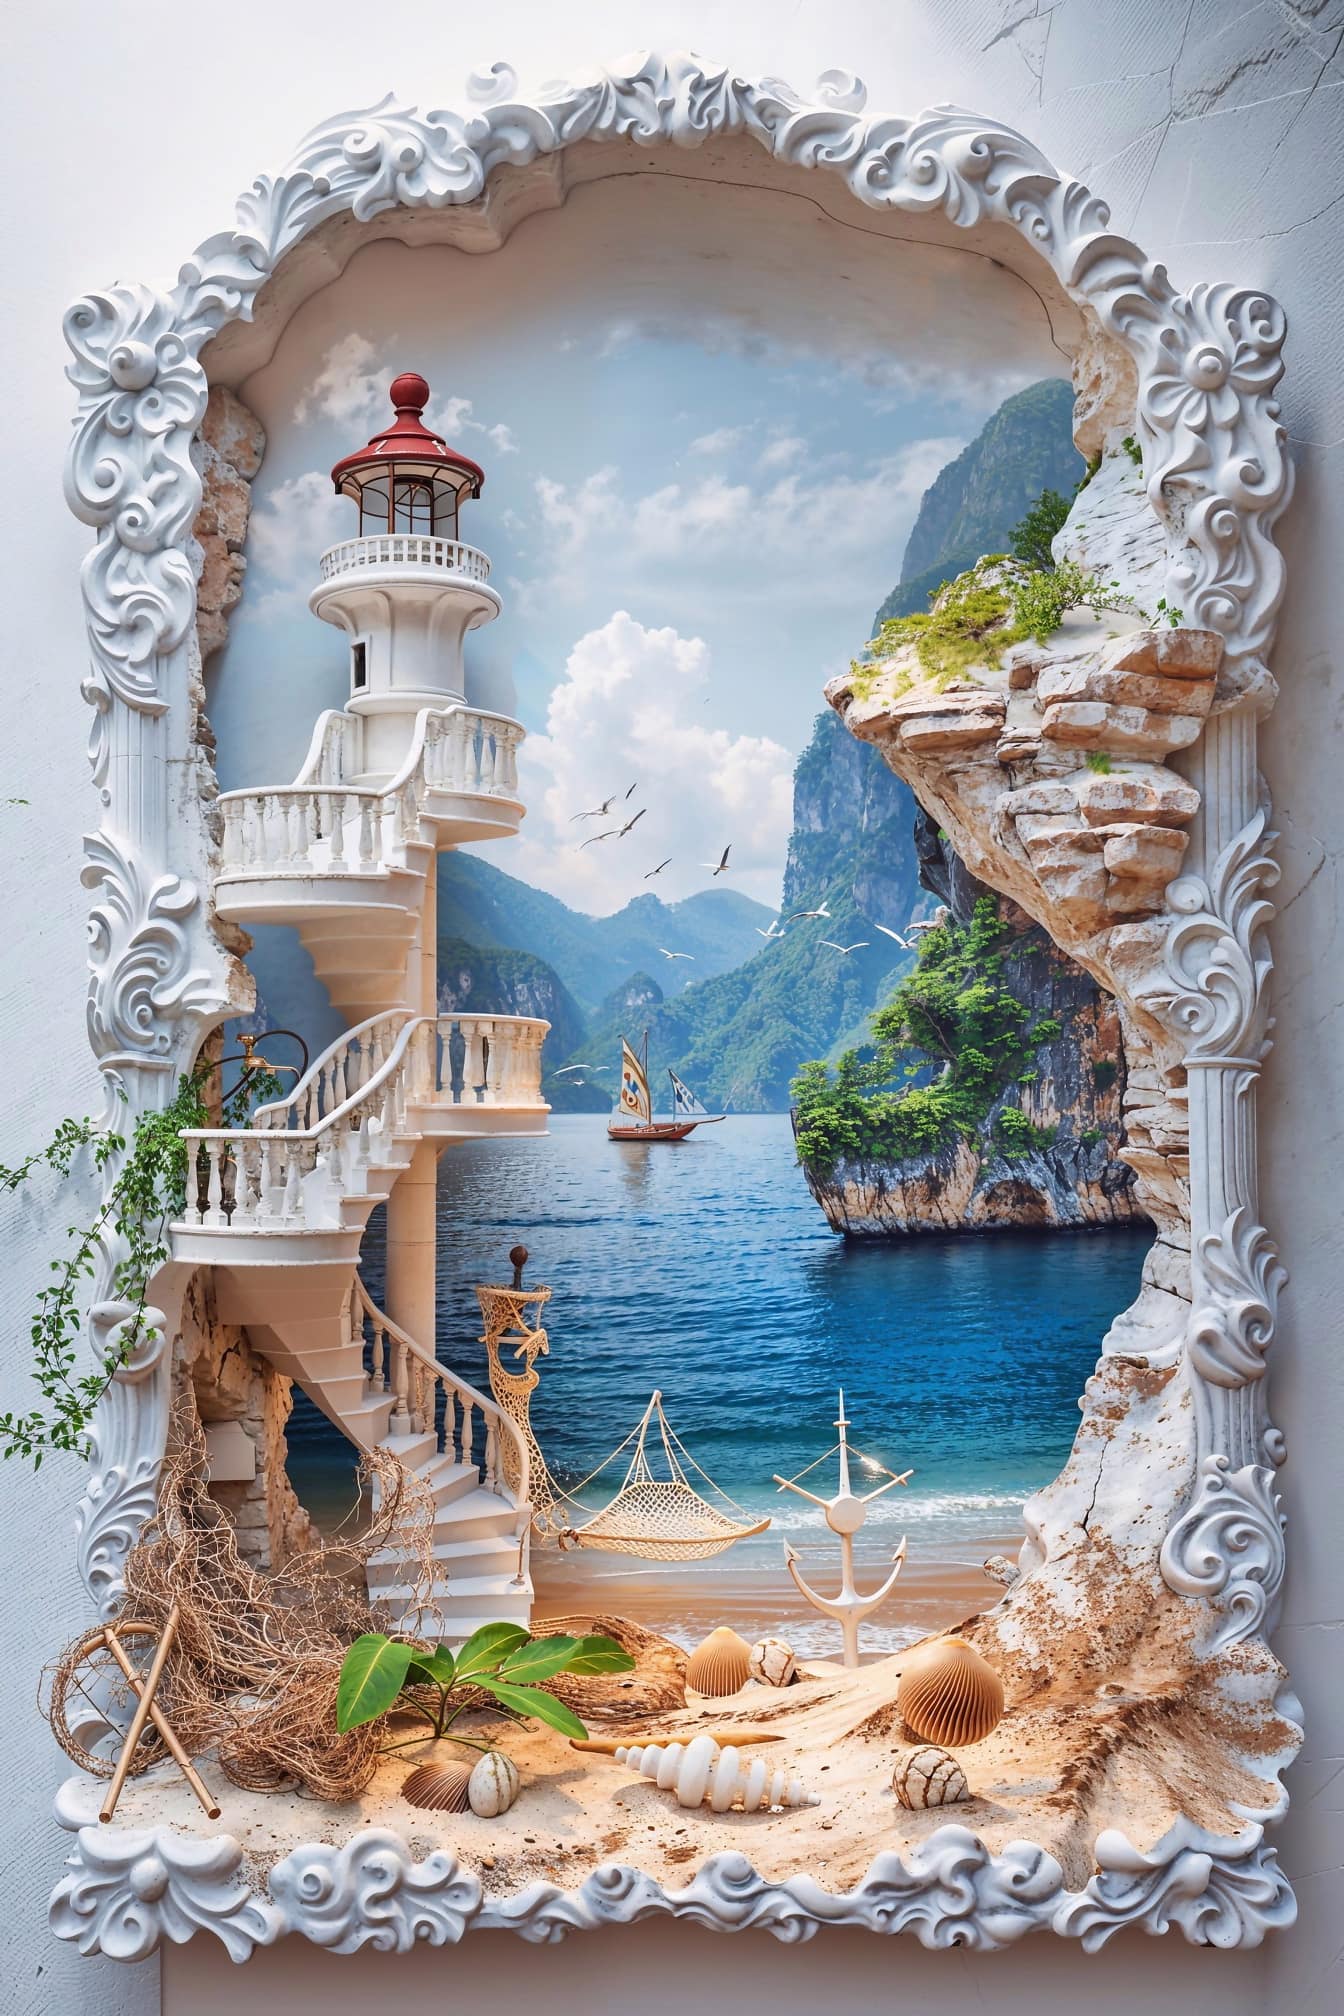 Bingkai putih 3D relief dengan mercusuar dan gambar perahu, hiasan di dinding dengan gaya bahari